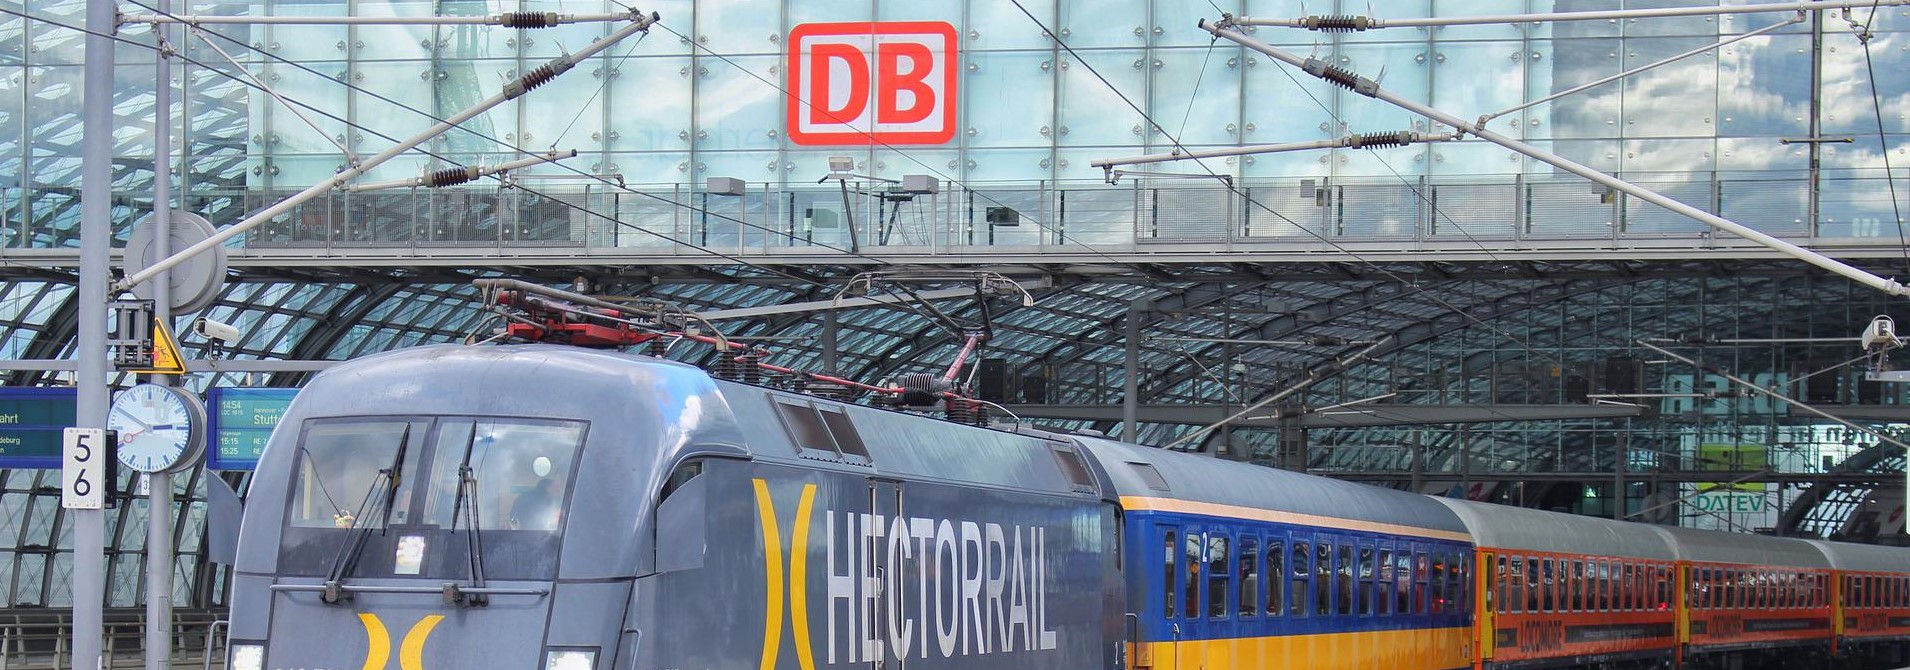 German Railway Corporate Name